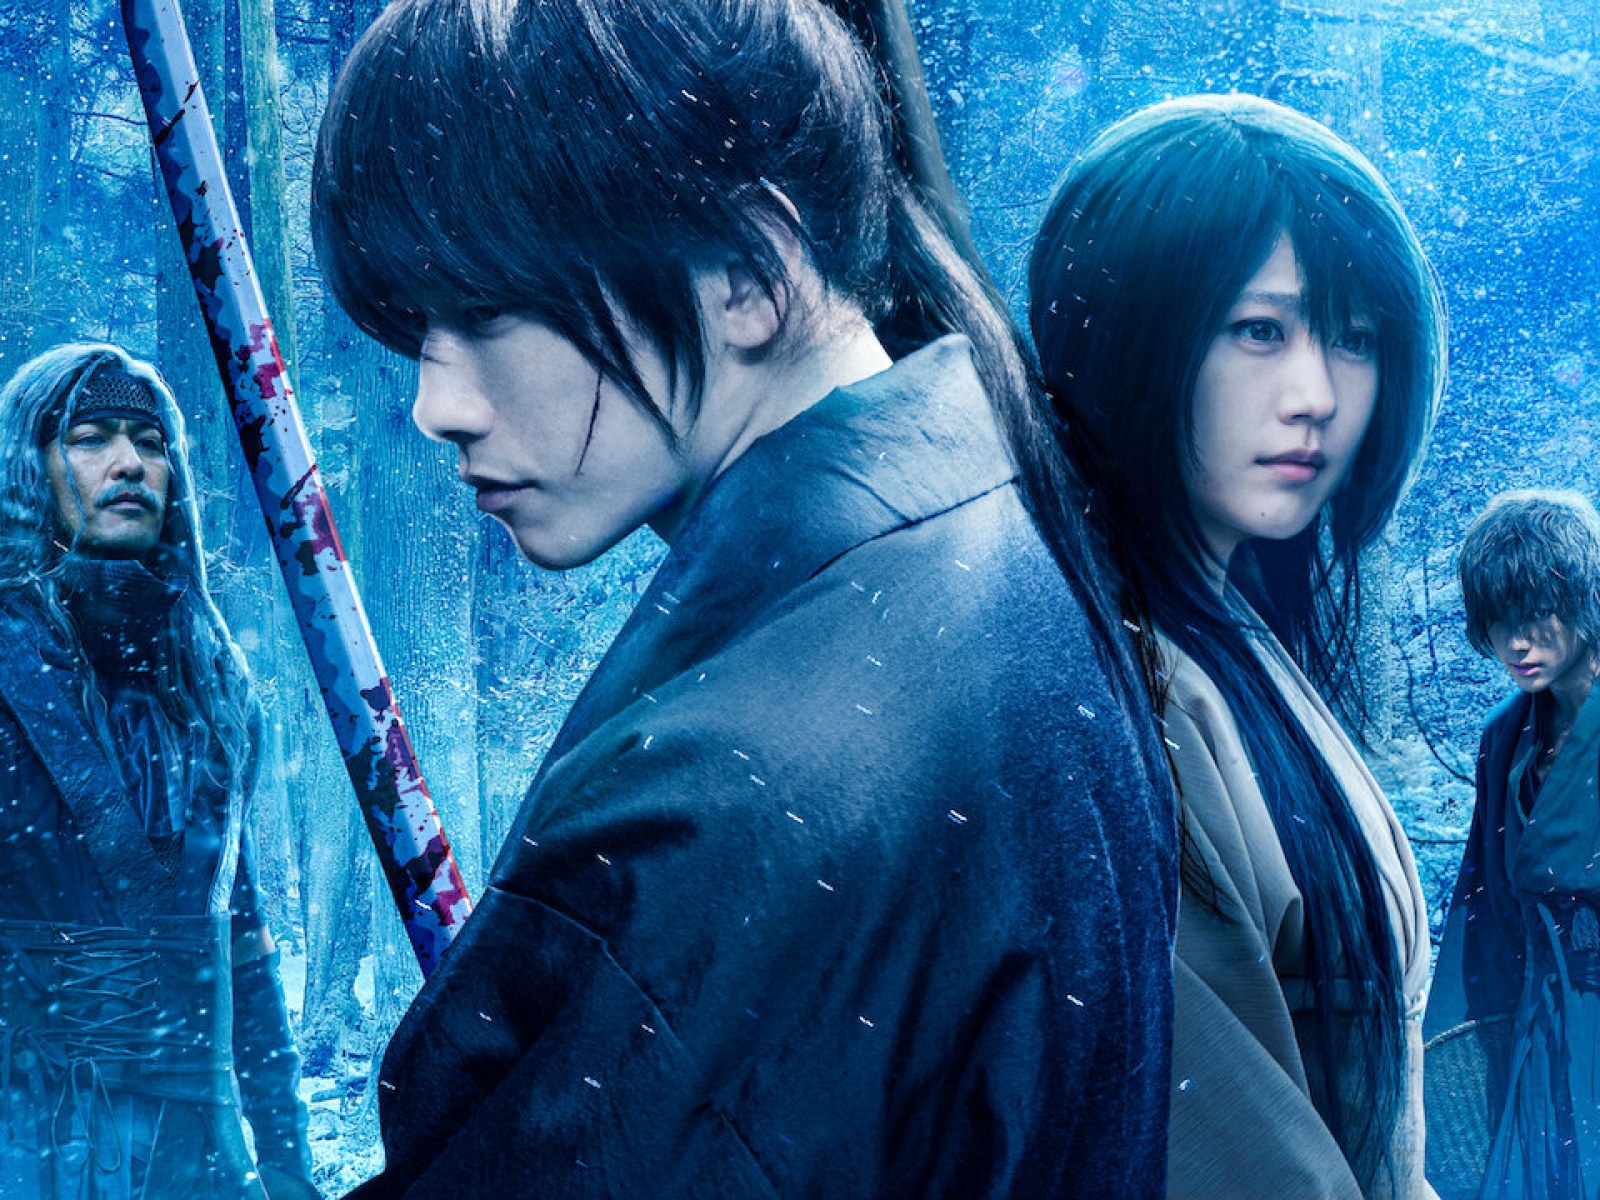 Rurouni Kenshin: The Beginning': How Actor Takeru Satoh Prepares Stunts for  Lead Role